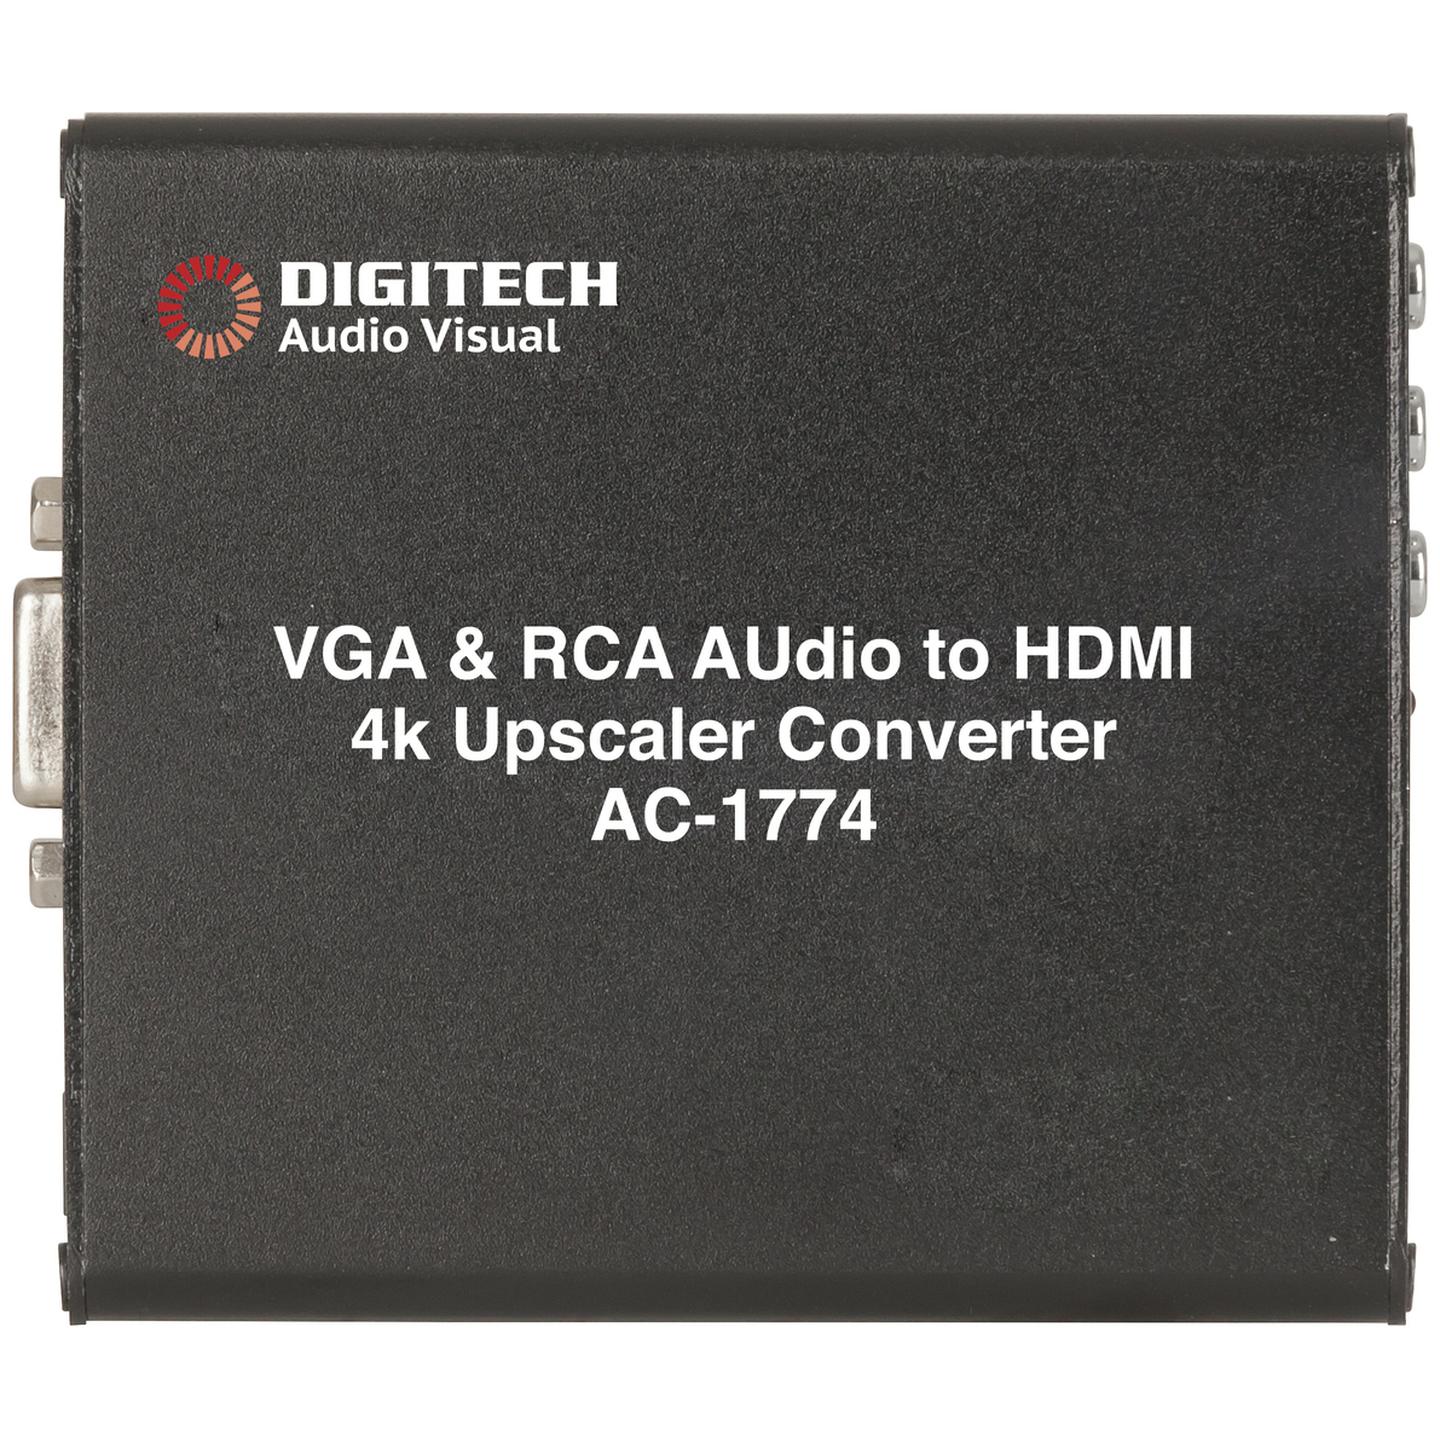 VGA and RCA Audio to HDMI 2.0 4K Upscaler Converter